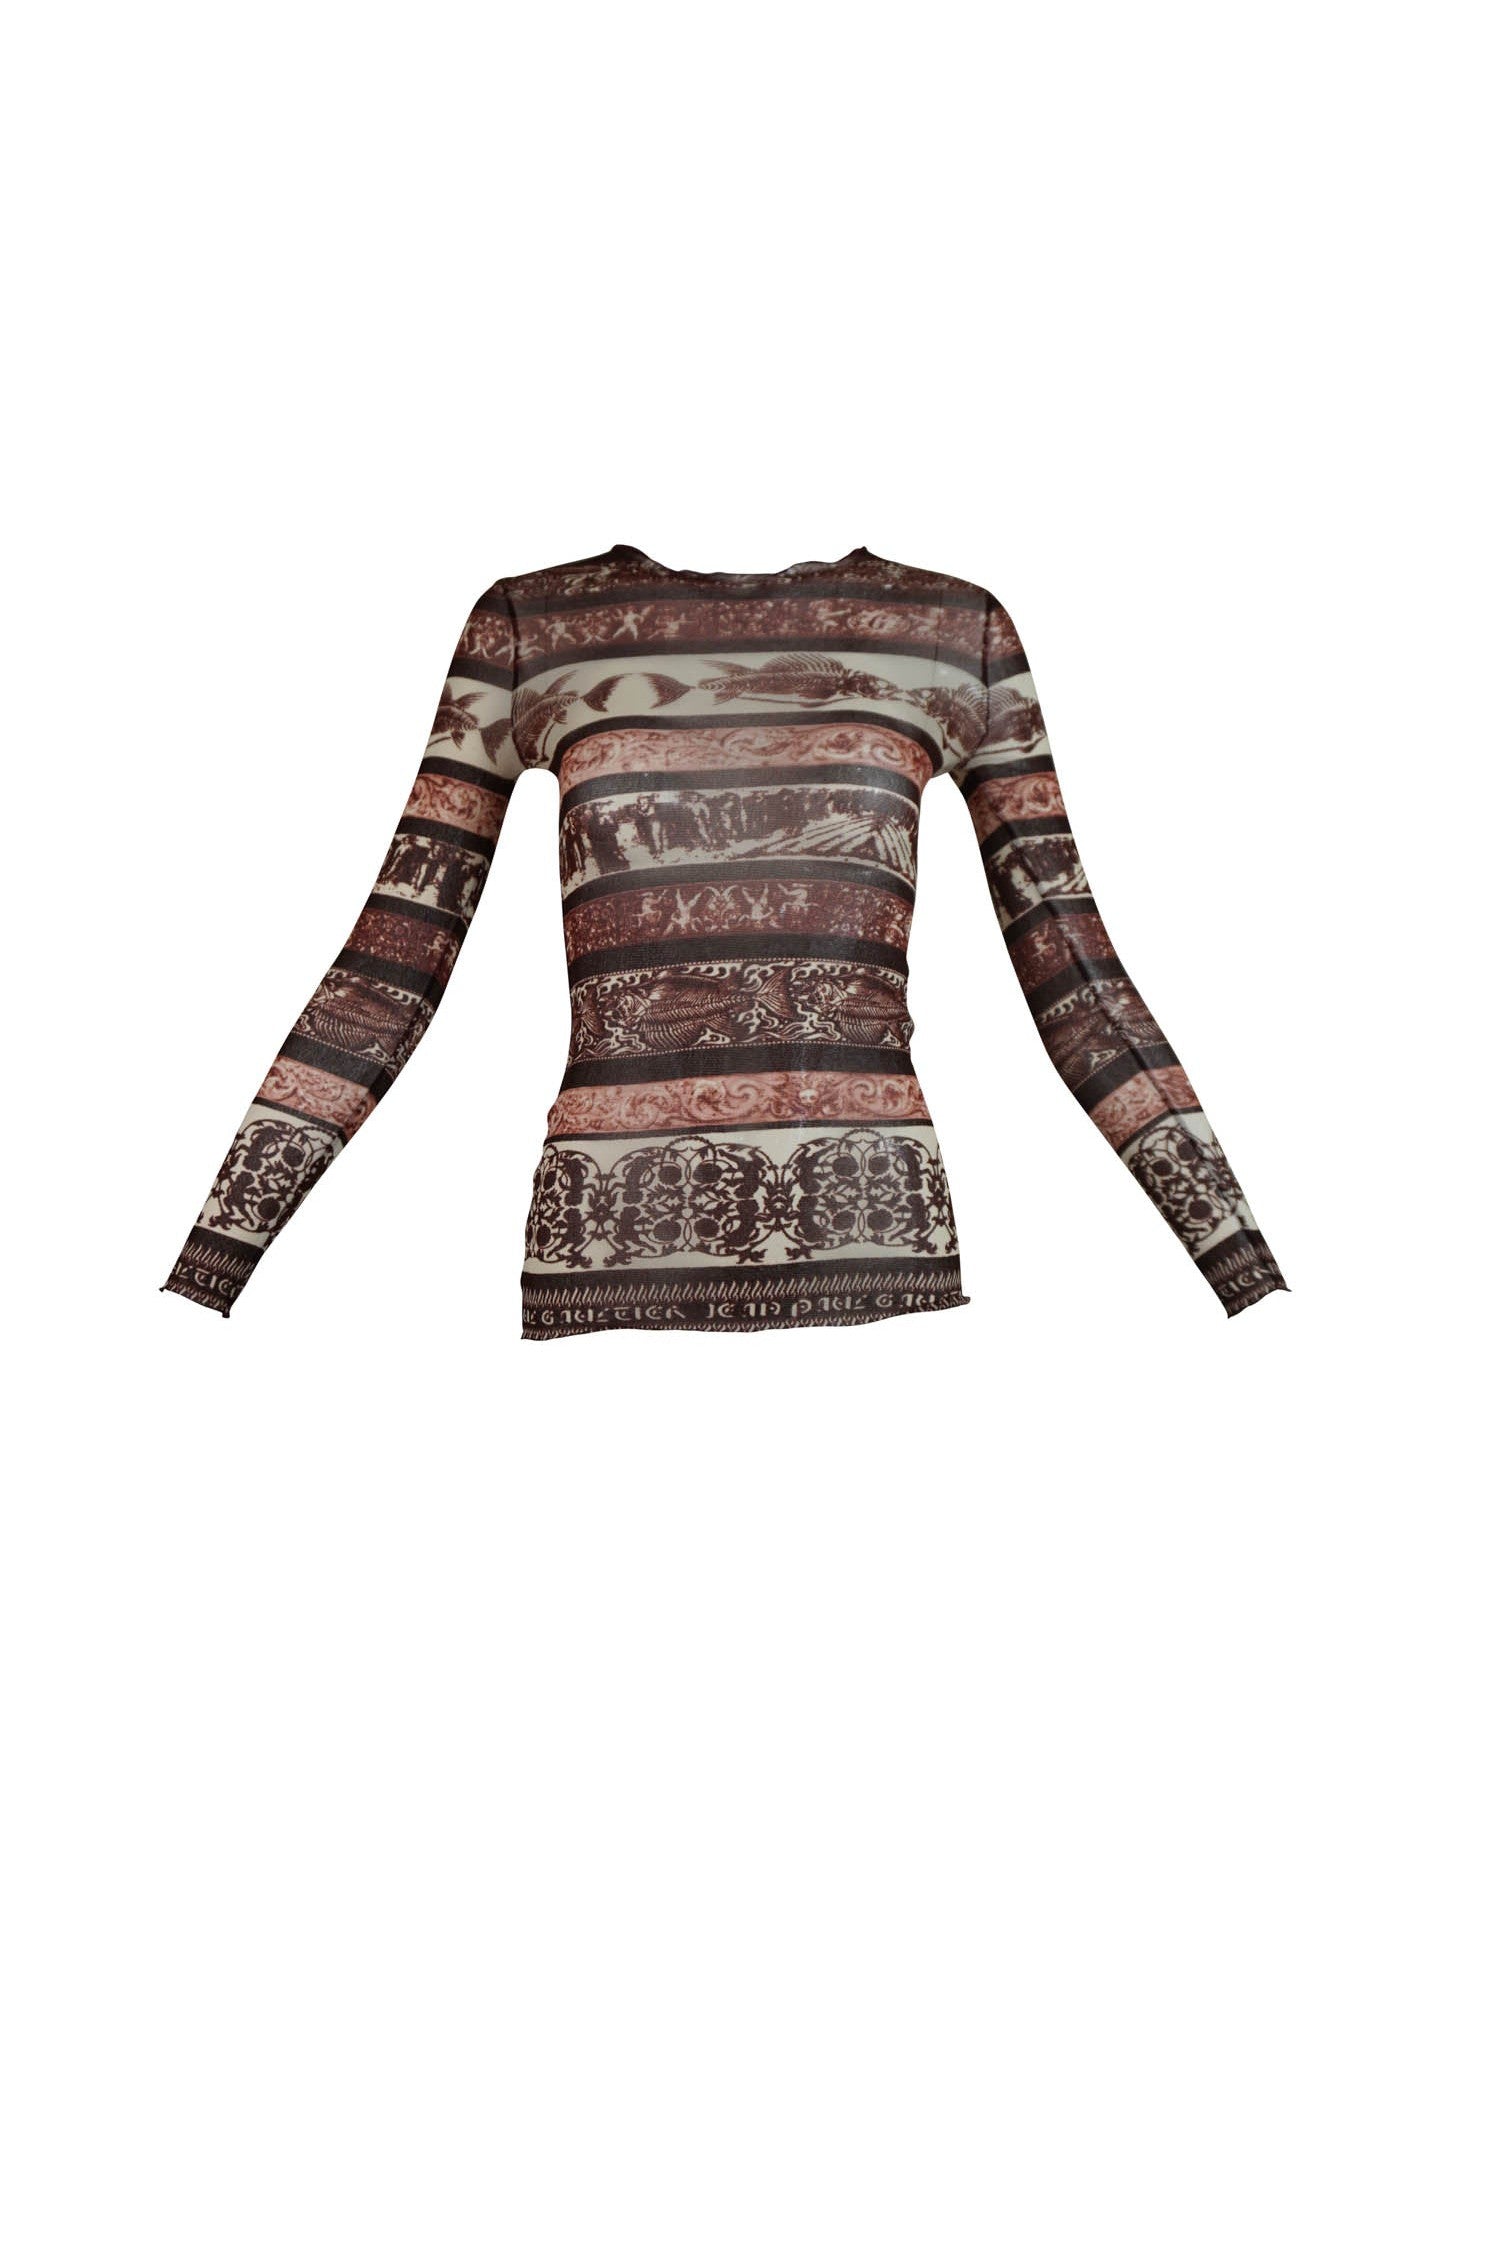 Jean Paul Gaultier Tribal Print Fuzzi Knit Long Sleeve Shirt Small